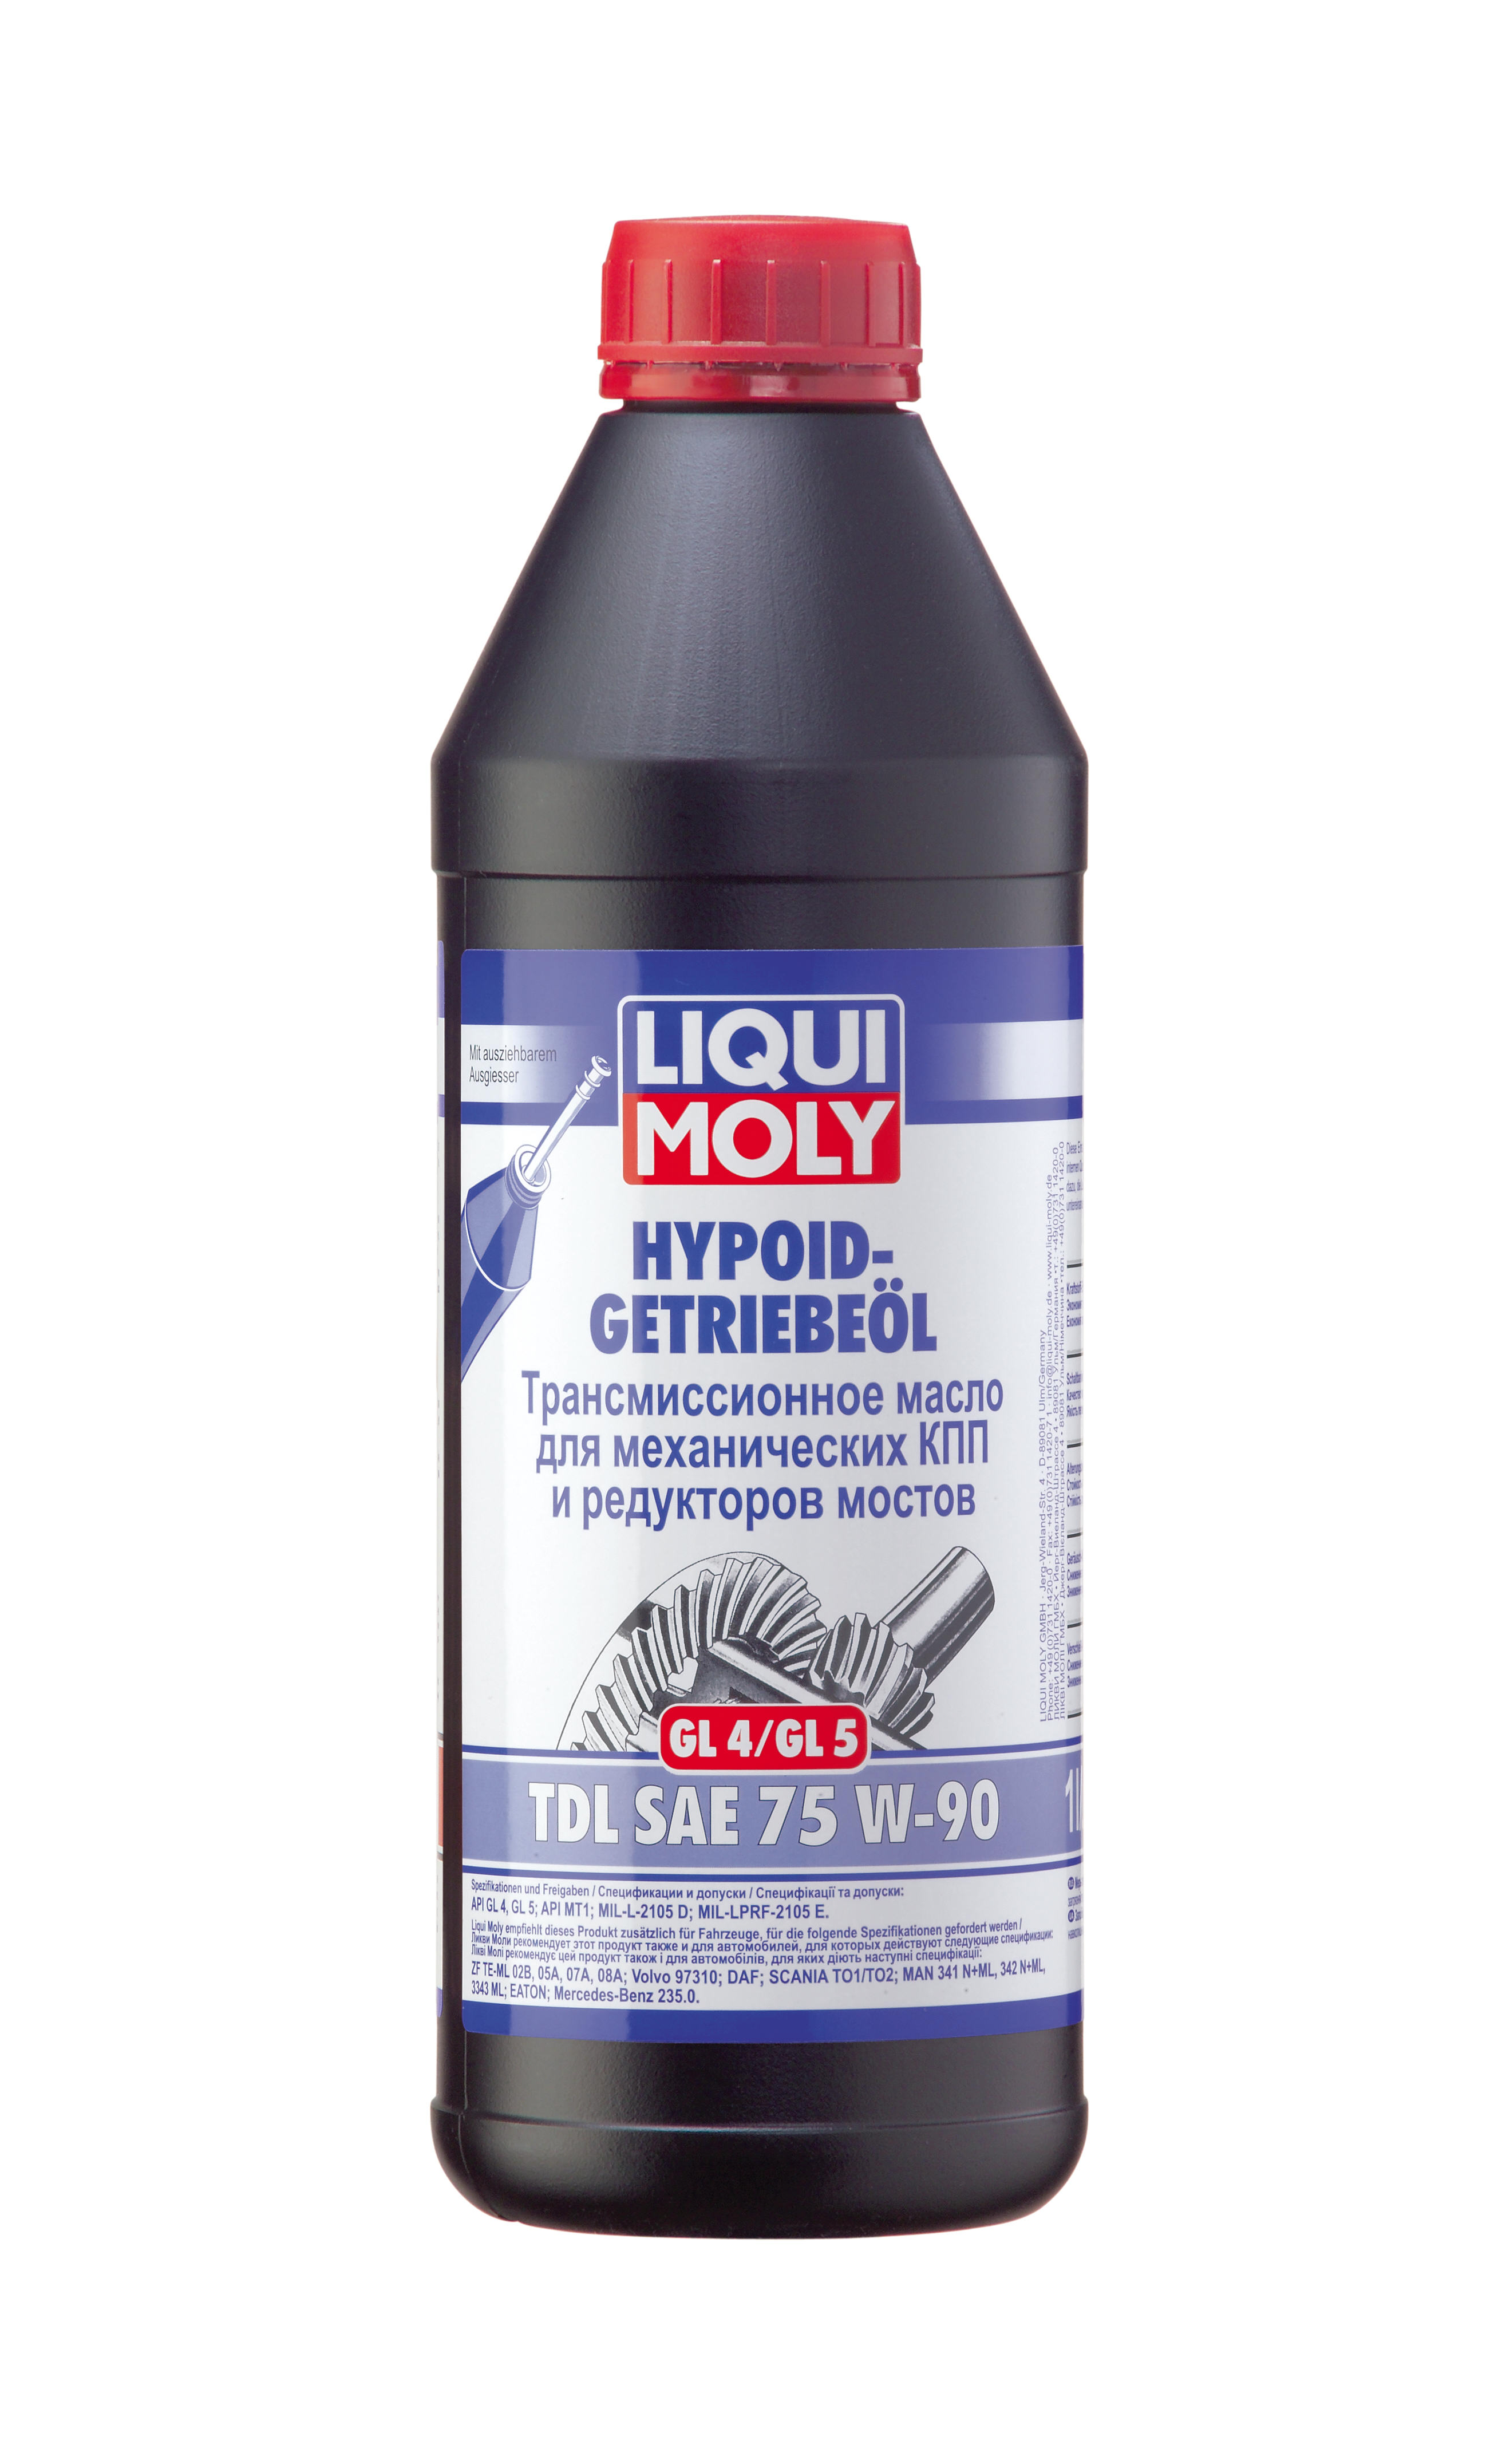 LIQUI MOLY Hypoid-Getriebeoil TDL 75W-90 GL-4 / GL-5 1л / Транмиссионное масло (3945)